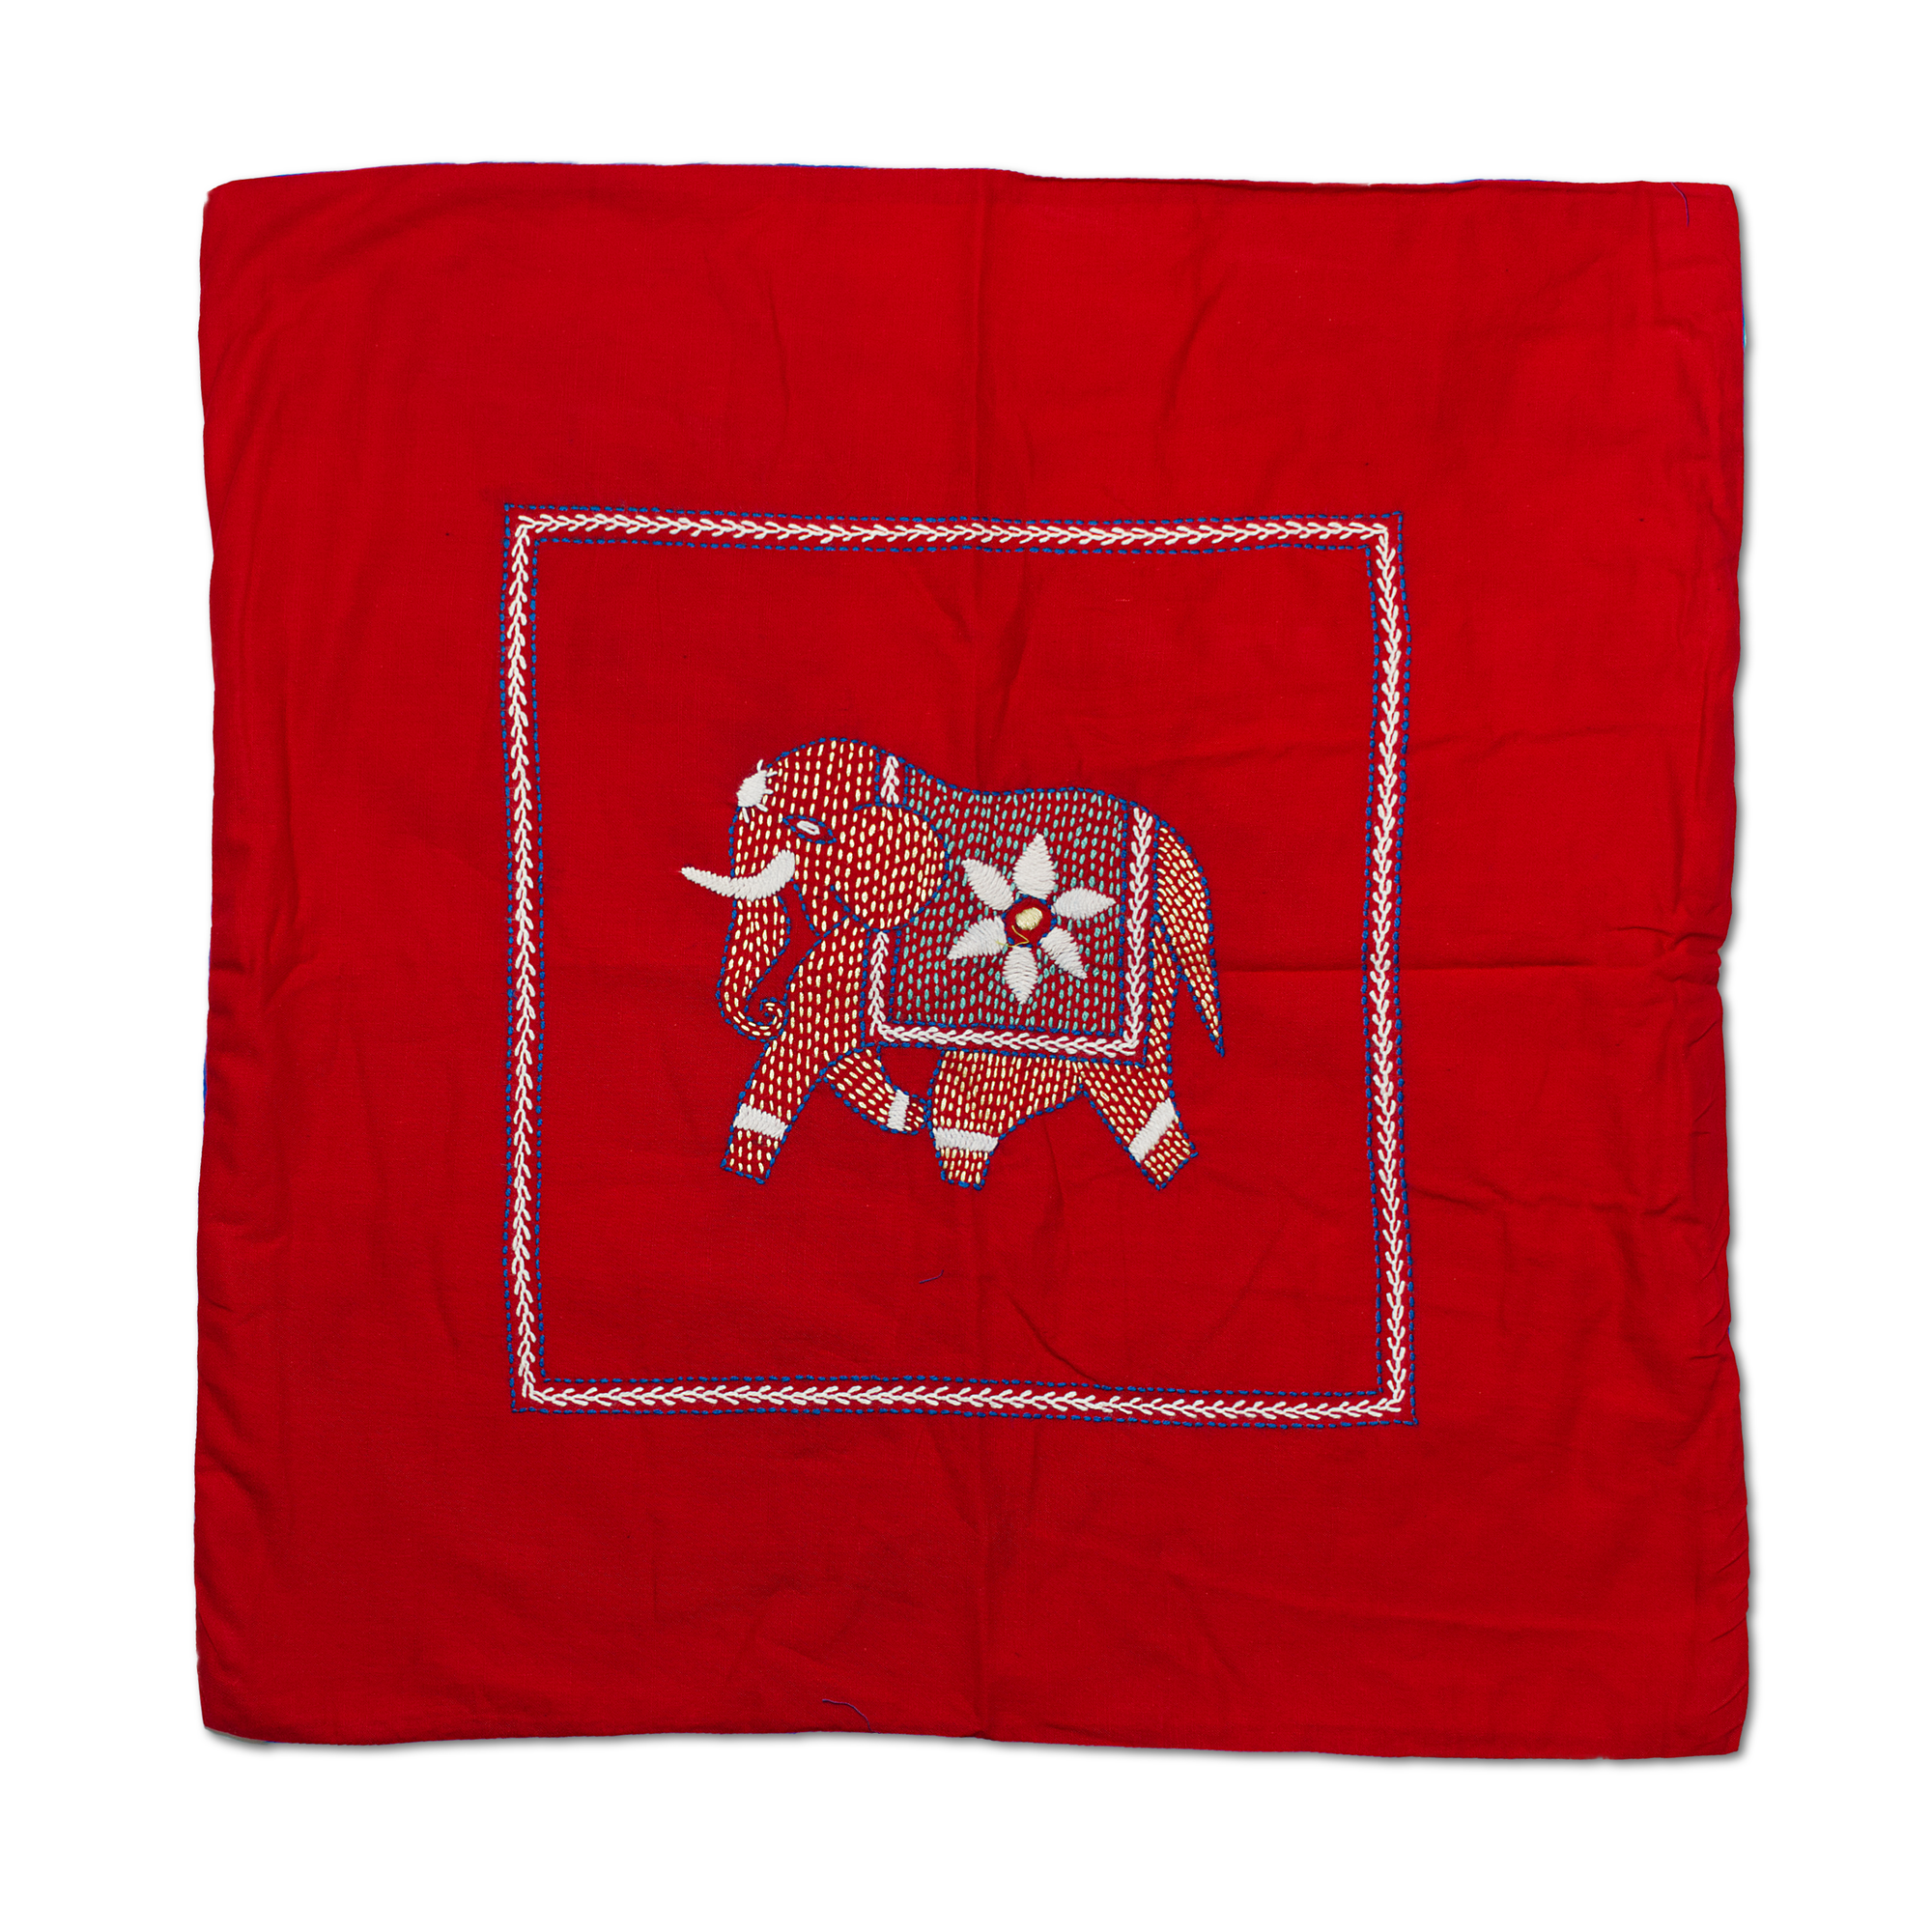 Cushion Covers - Dinajpur (elephant) Design - Sumi (Red)